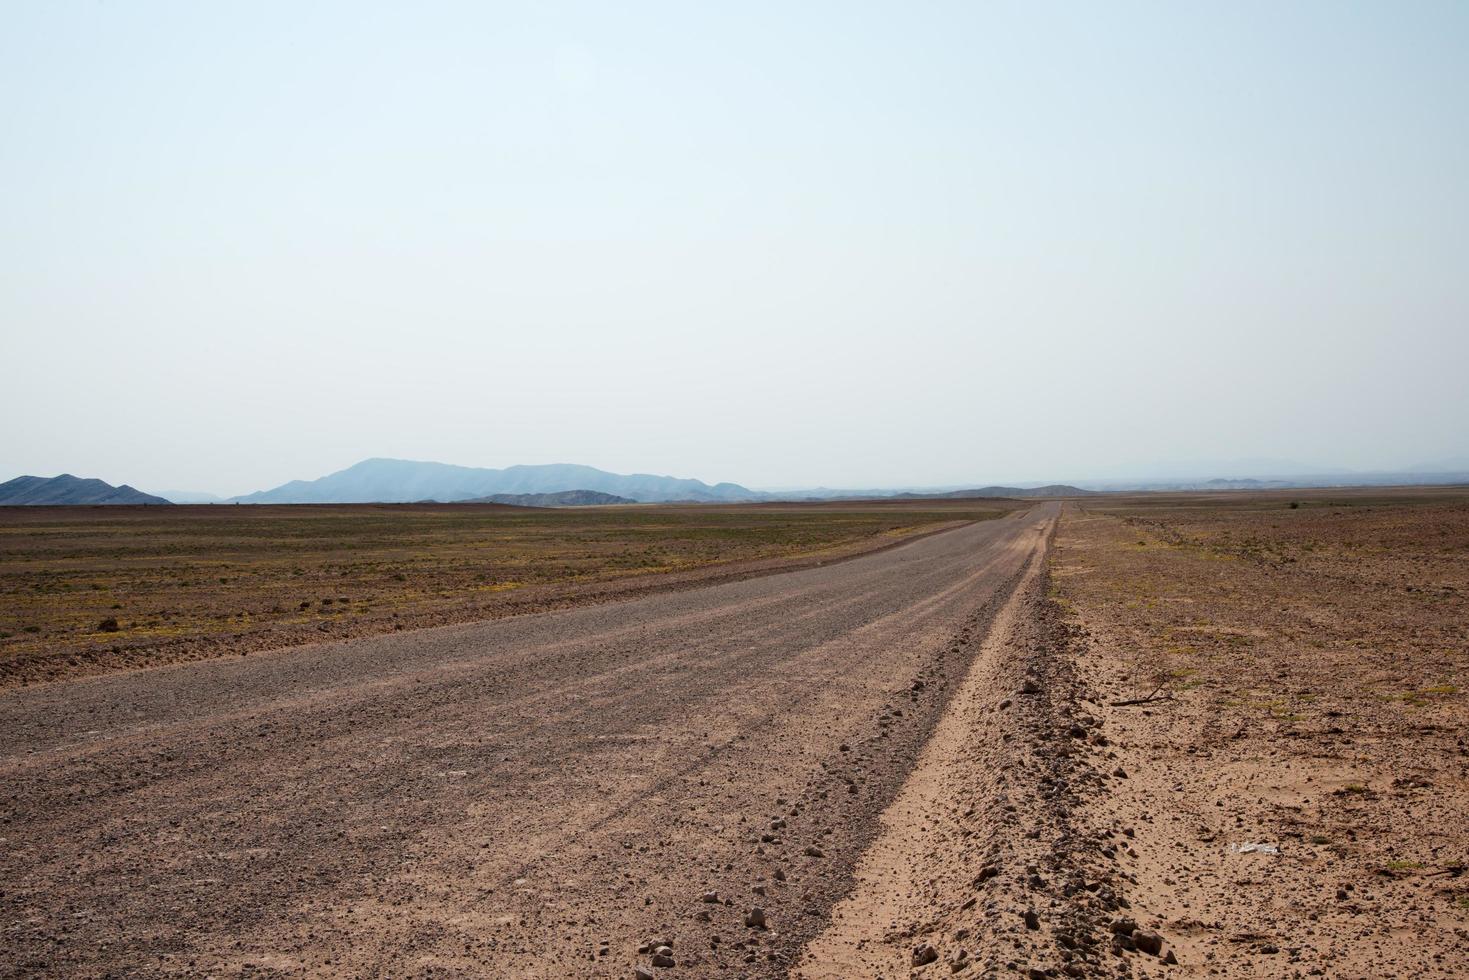 Sandy empty road crossing the namibian desert. Namibia photo